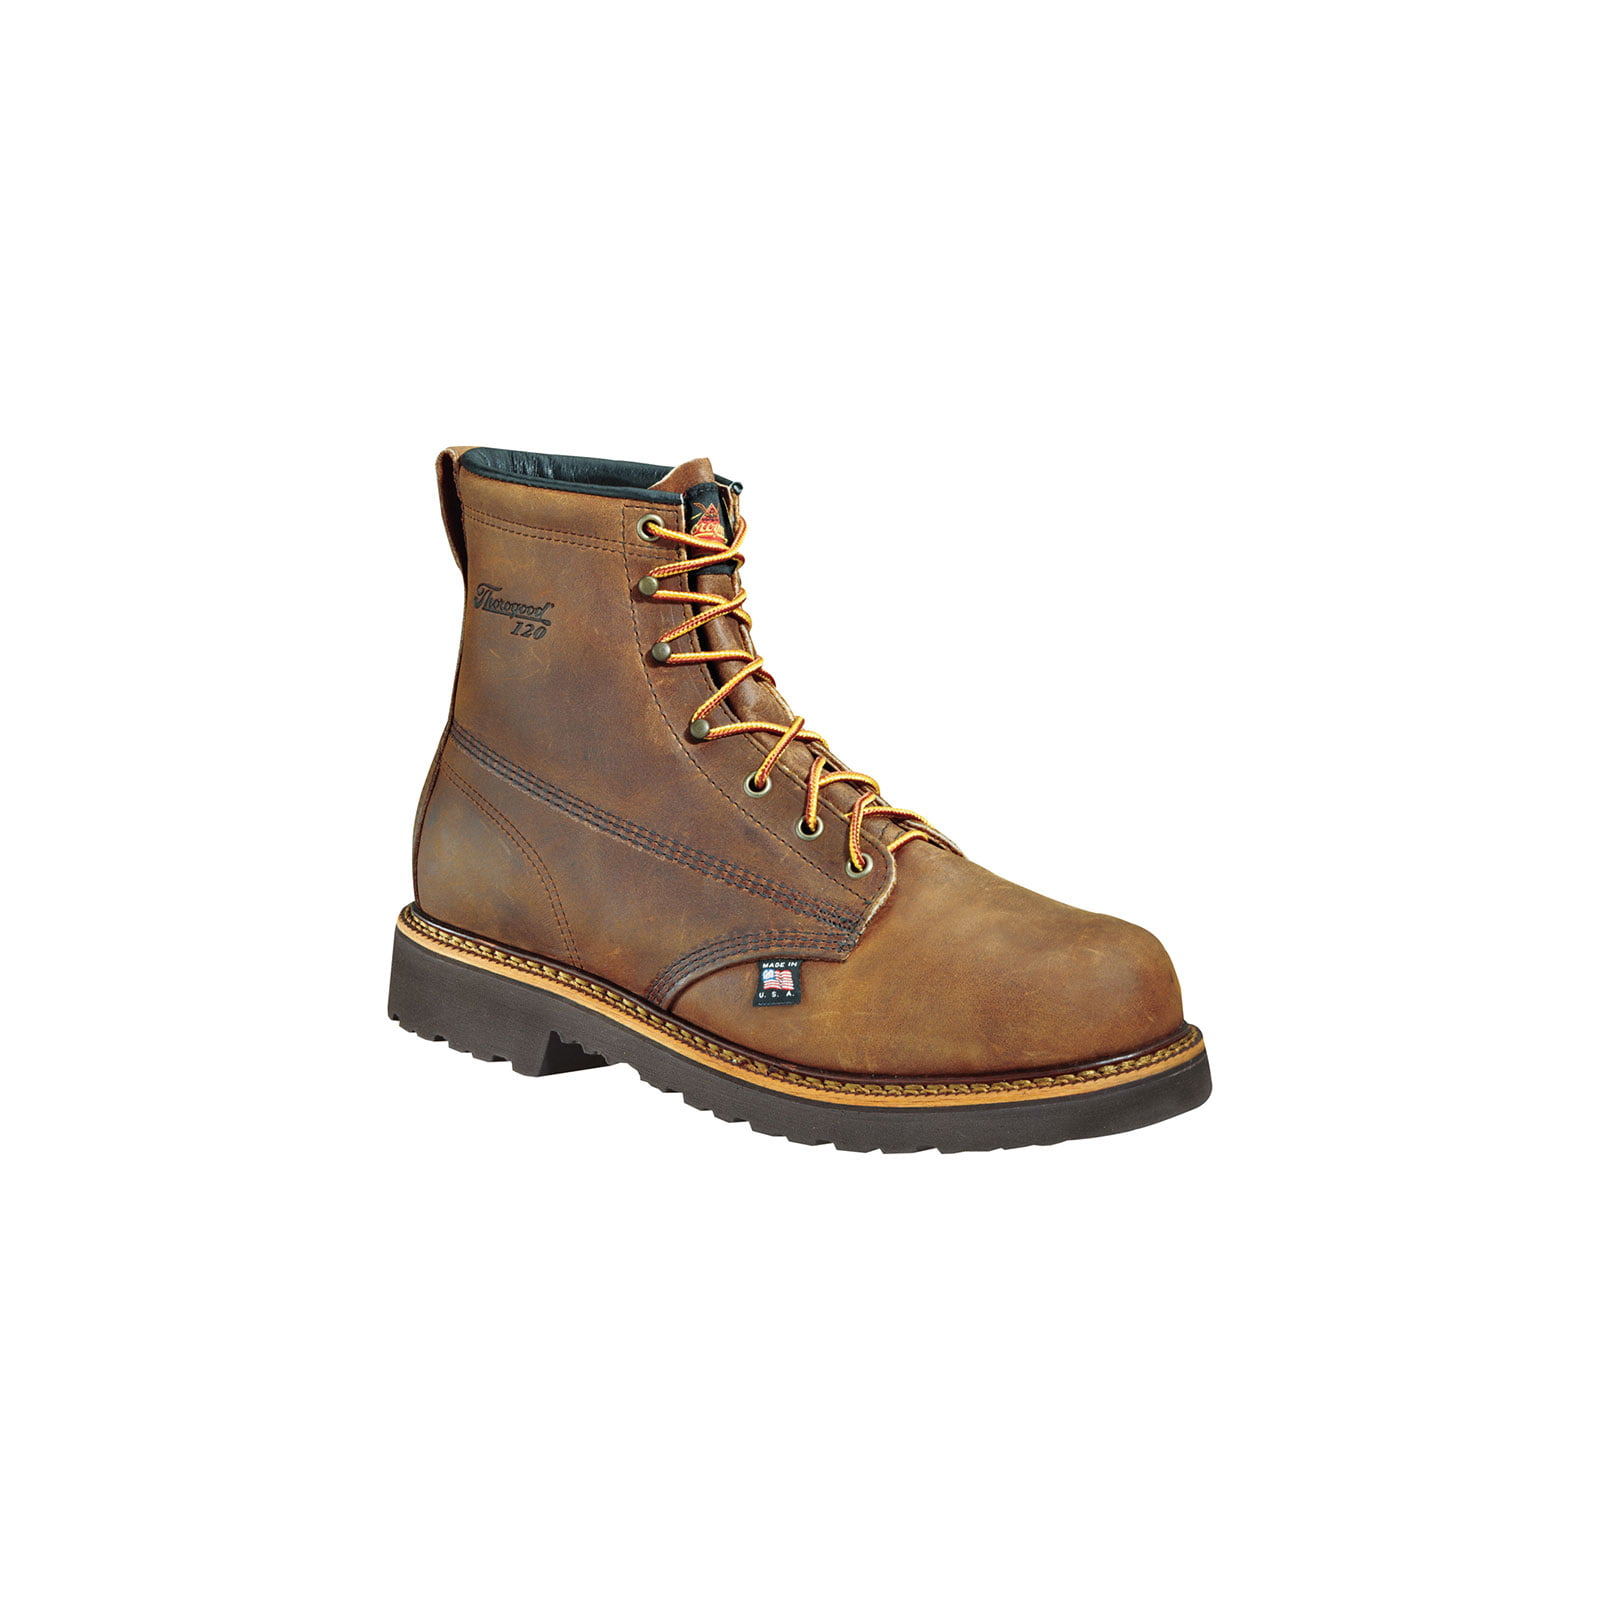 Thorogood 6 Inch Plain Steel Toe Brown Work Boots 804-3366 USA 